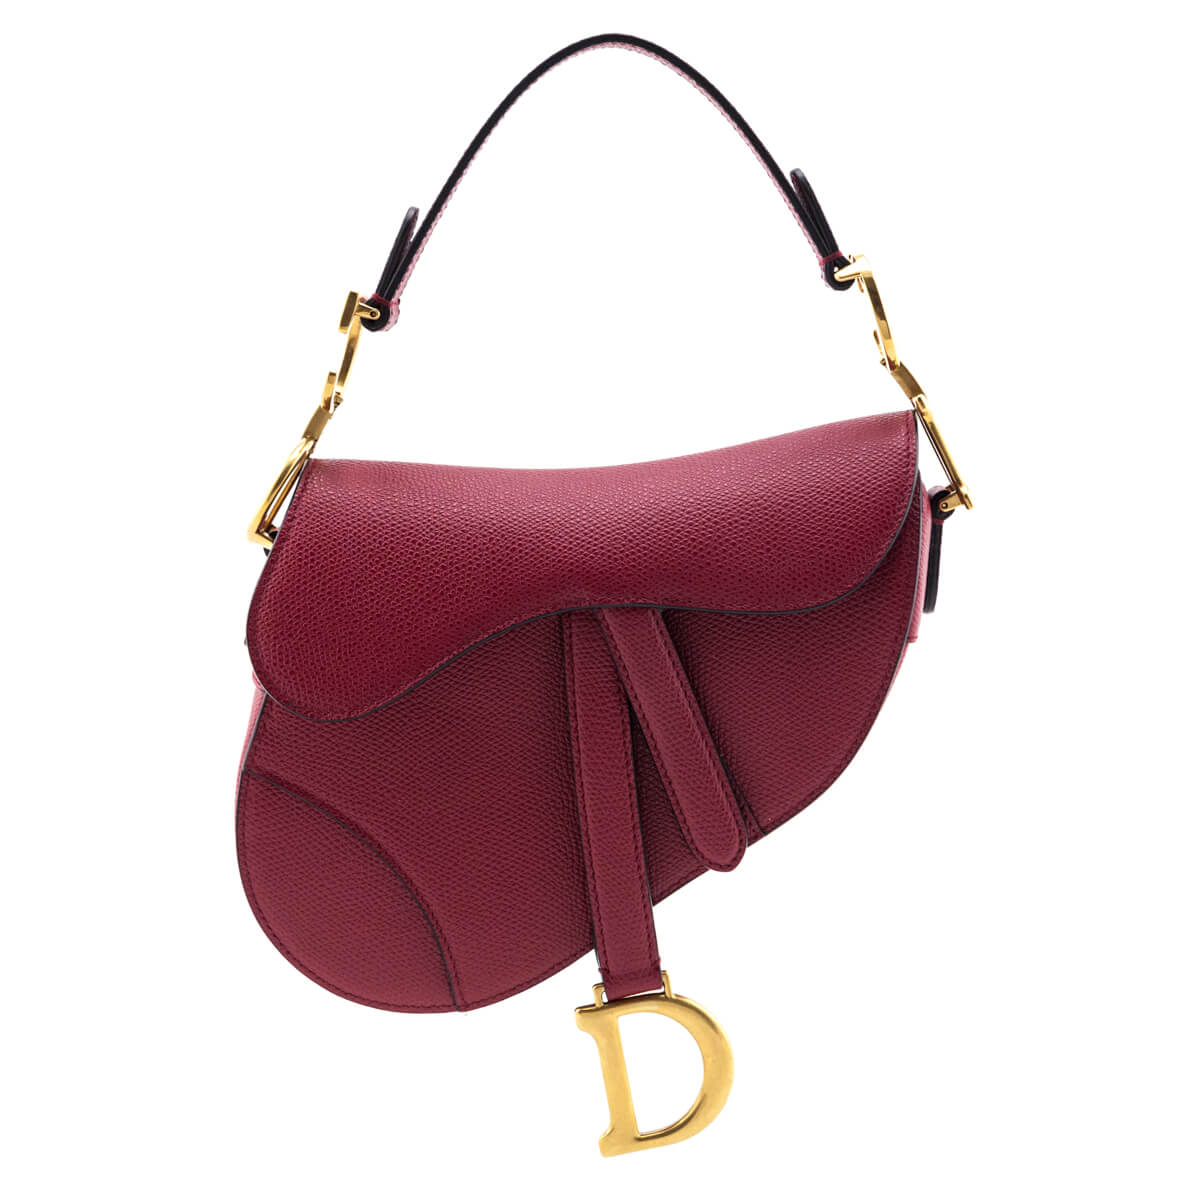 Christian Dior Saddle Bag 2020 HB4058 Second Hand Handbags Xupes   ozgurwoodscom